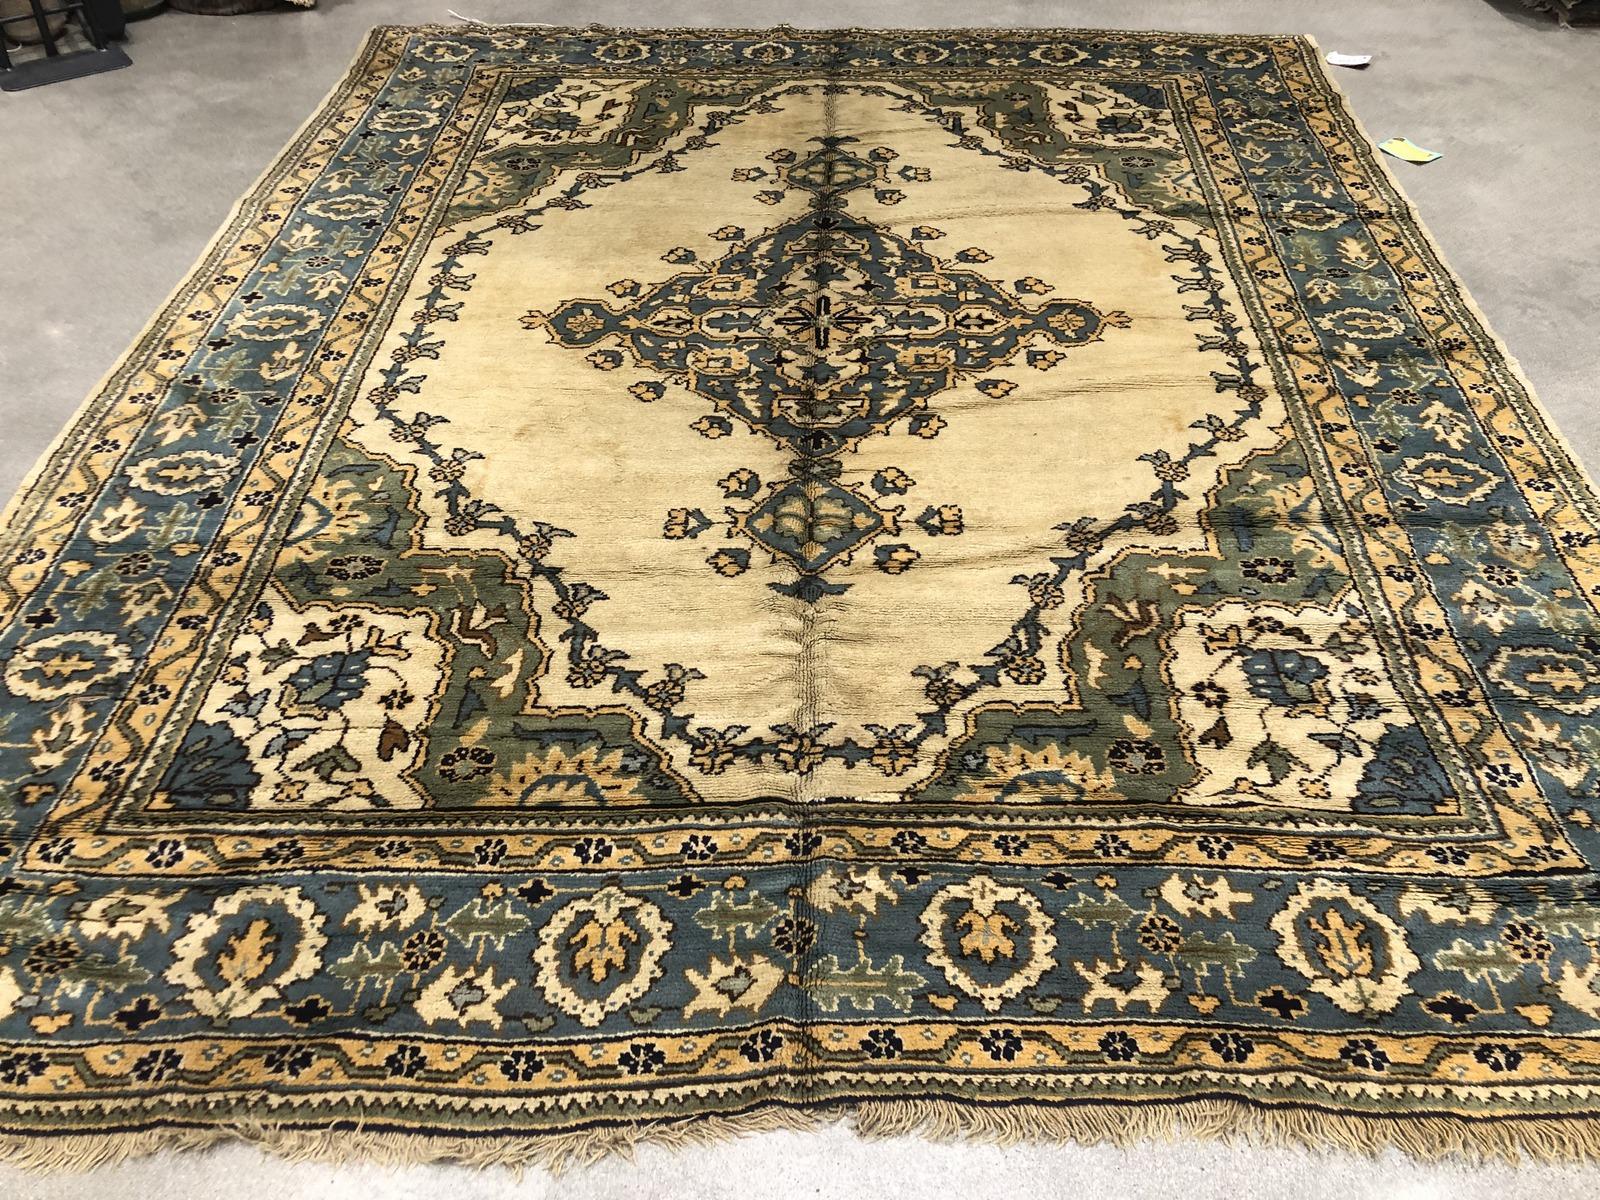 Antique Oushak rug

Measurement: 9'7